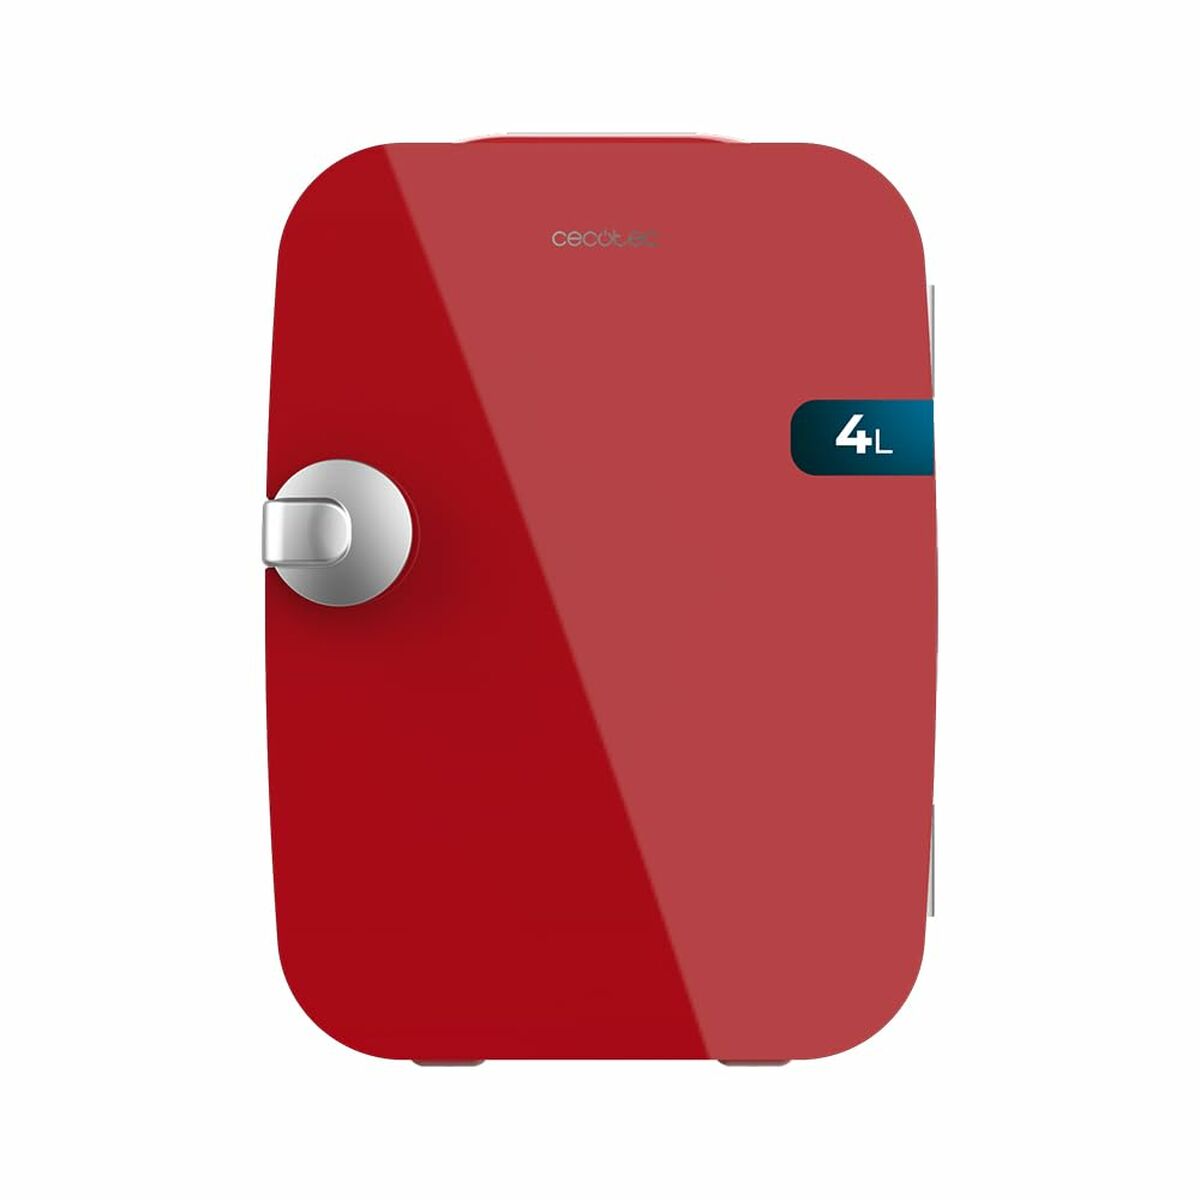 Mini-Kühlschrank Cecotec Rio Rot - AWK Flagship